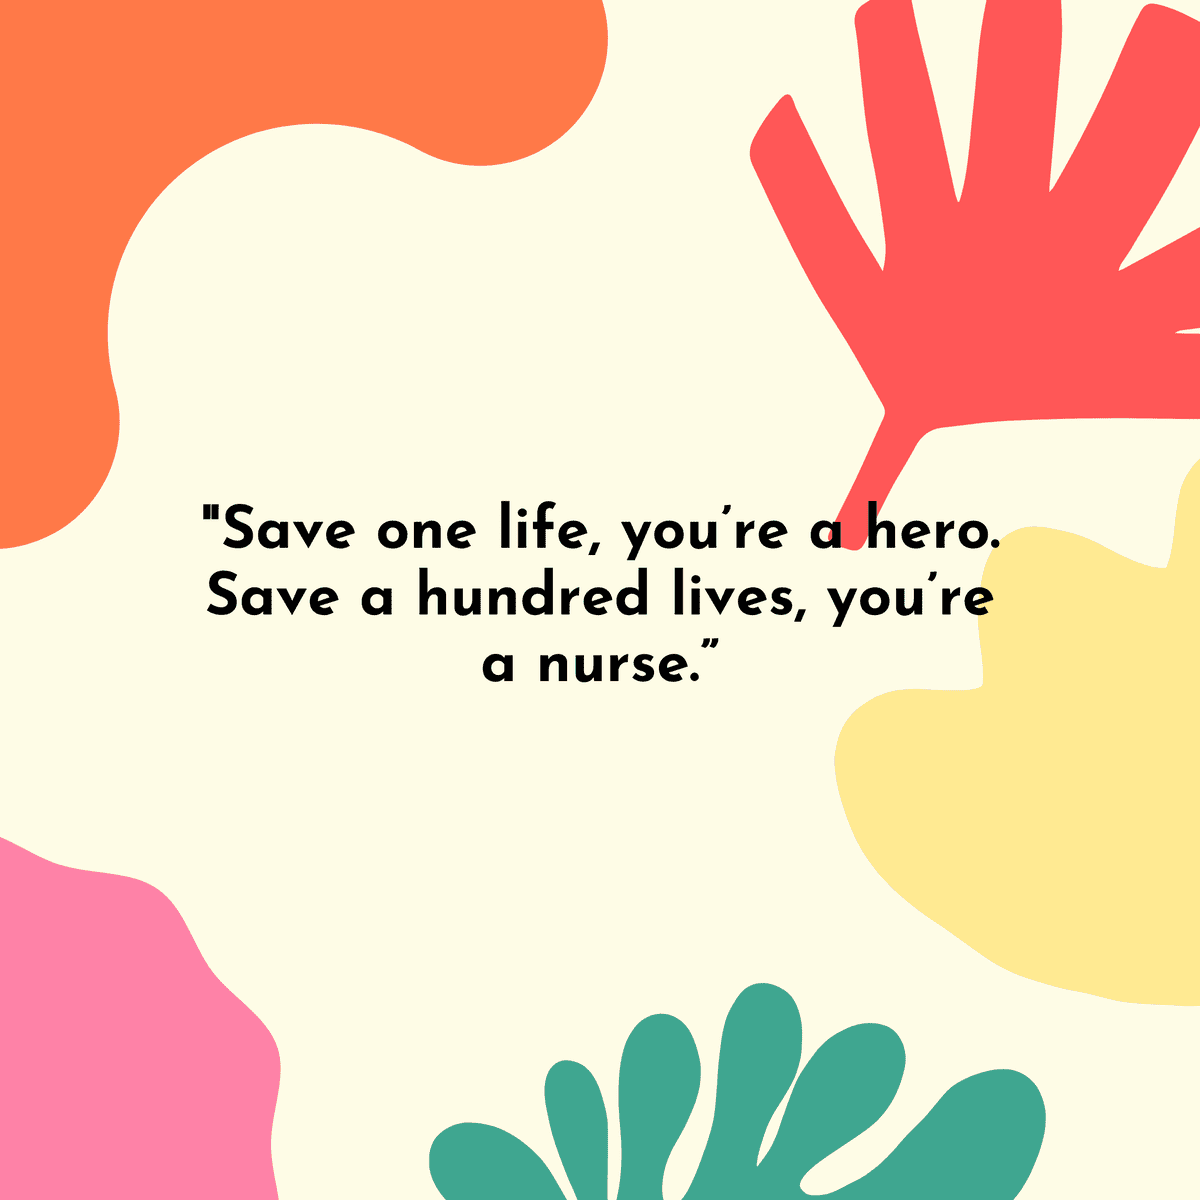 "Save one life, you’re a hero. Save a hundred lives, you’re a nurse.”